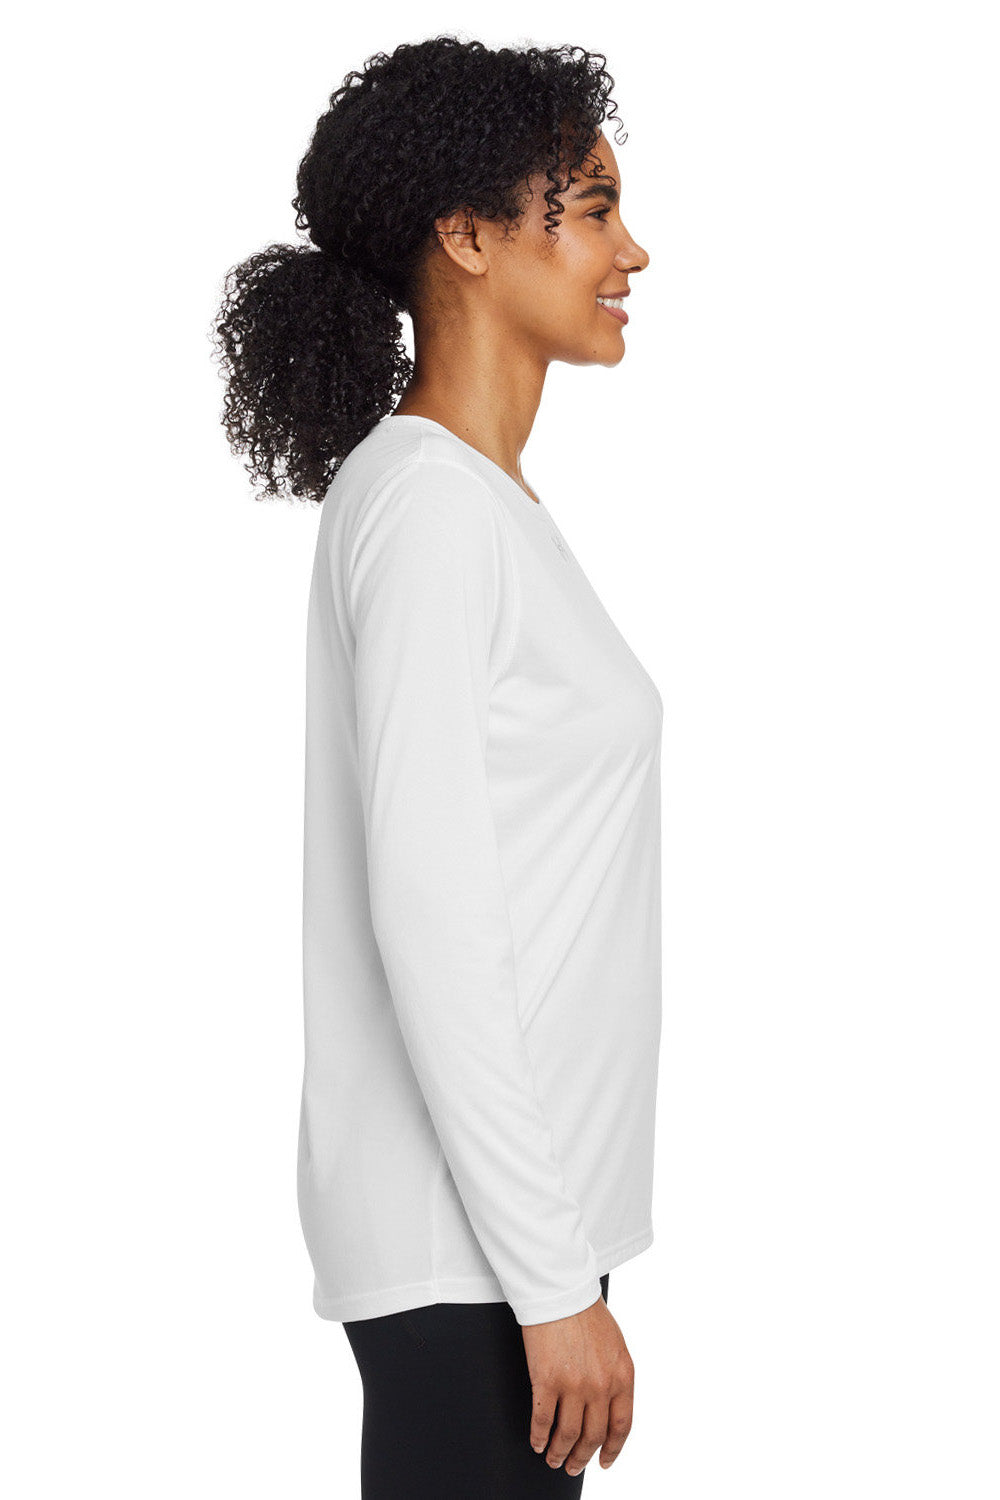 Under Armour 1376852 Womens Team Tech Moisture Wicking Long Sleeve Crewneck T-Shirt White Model Side